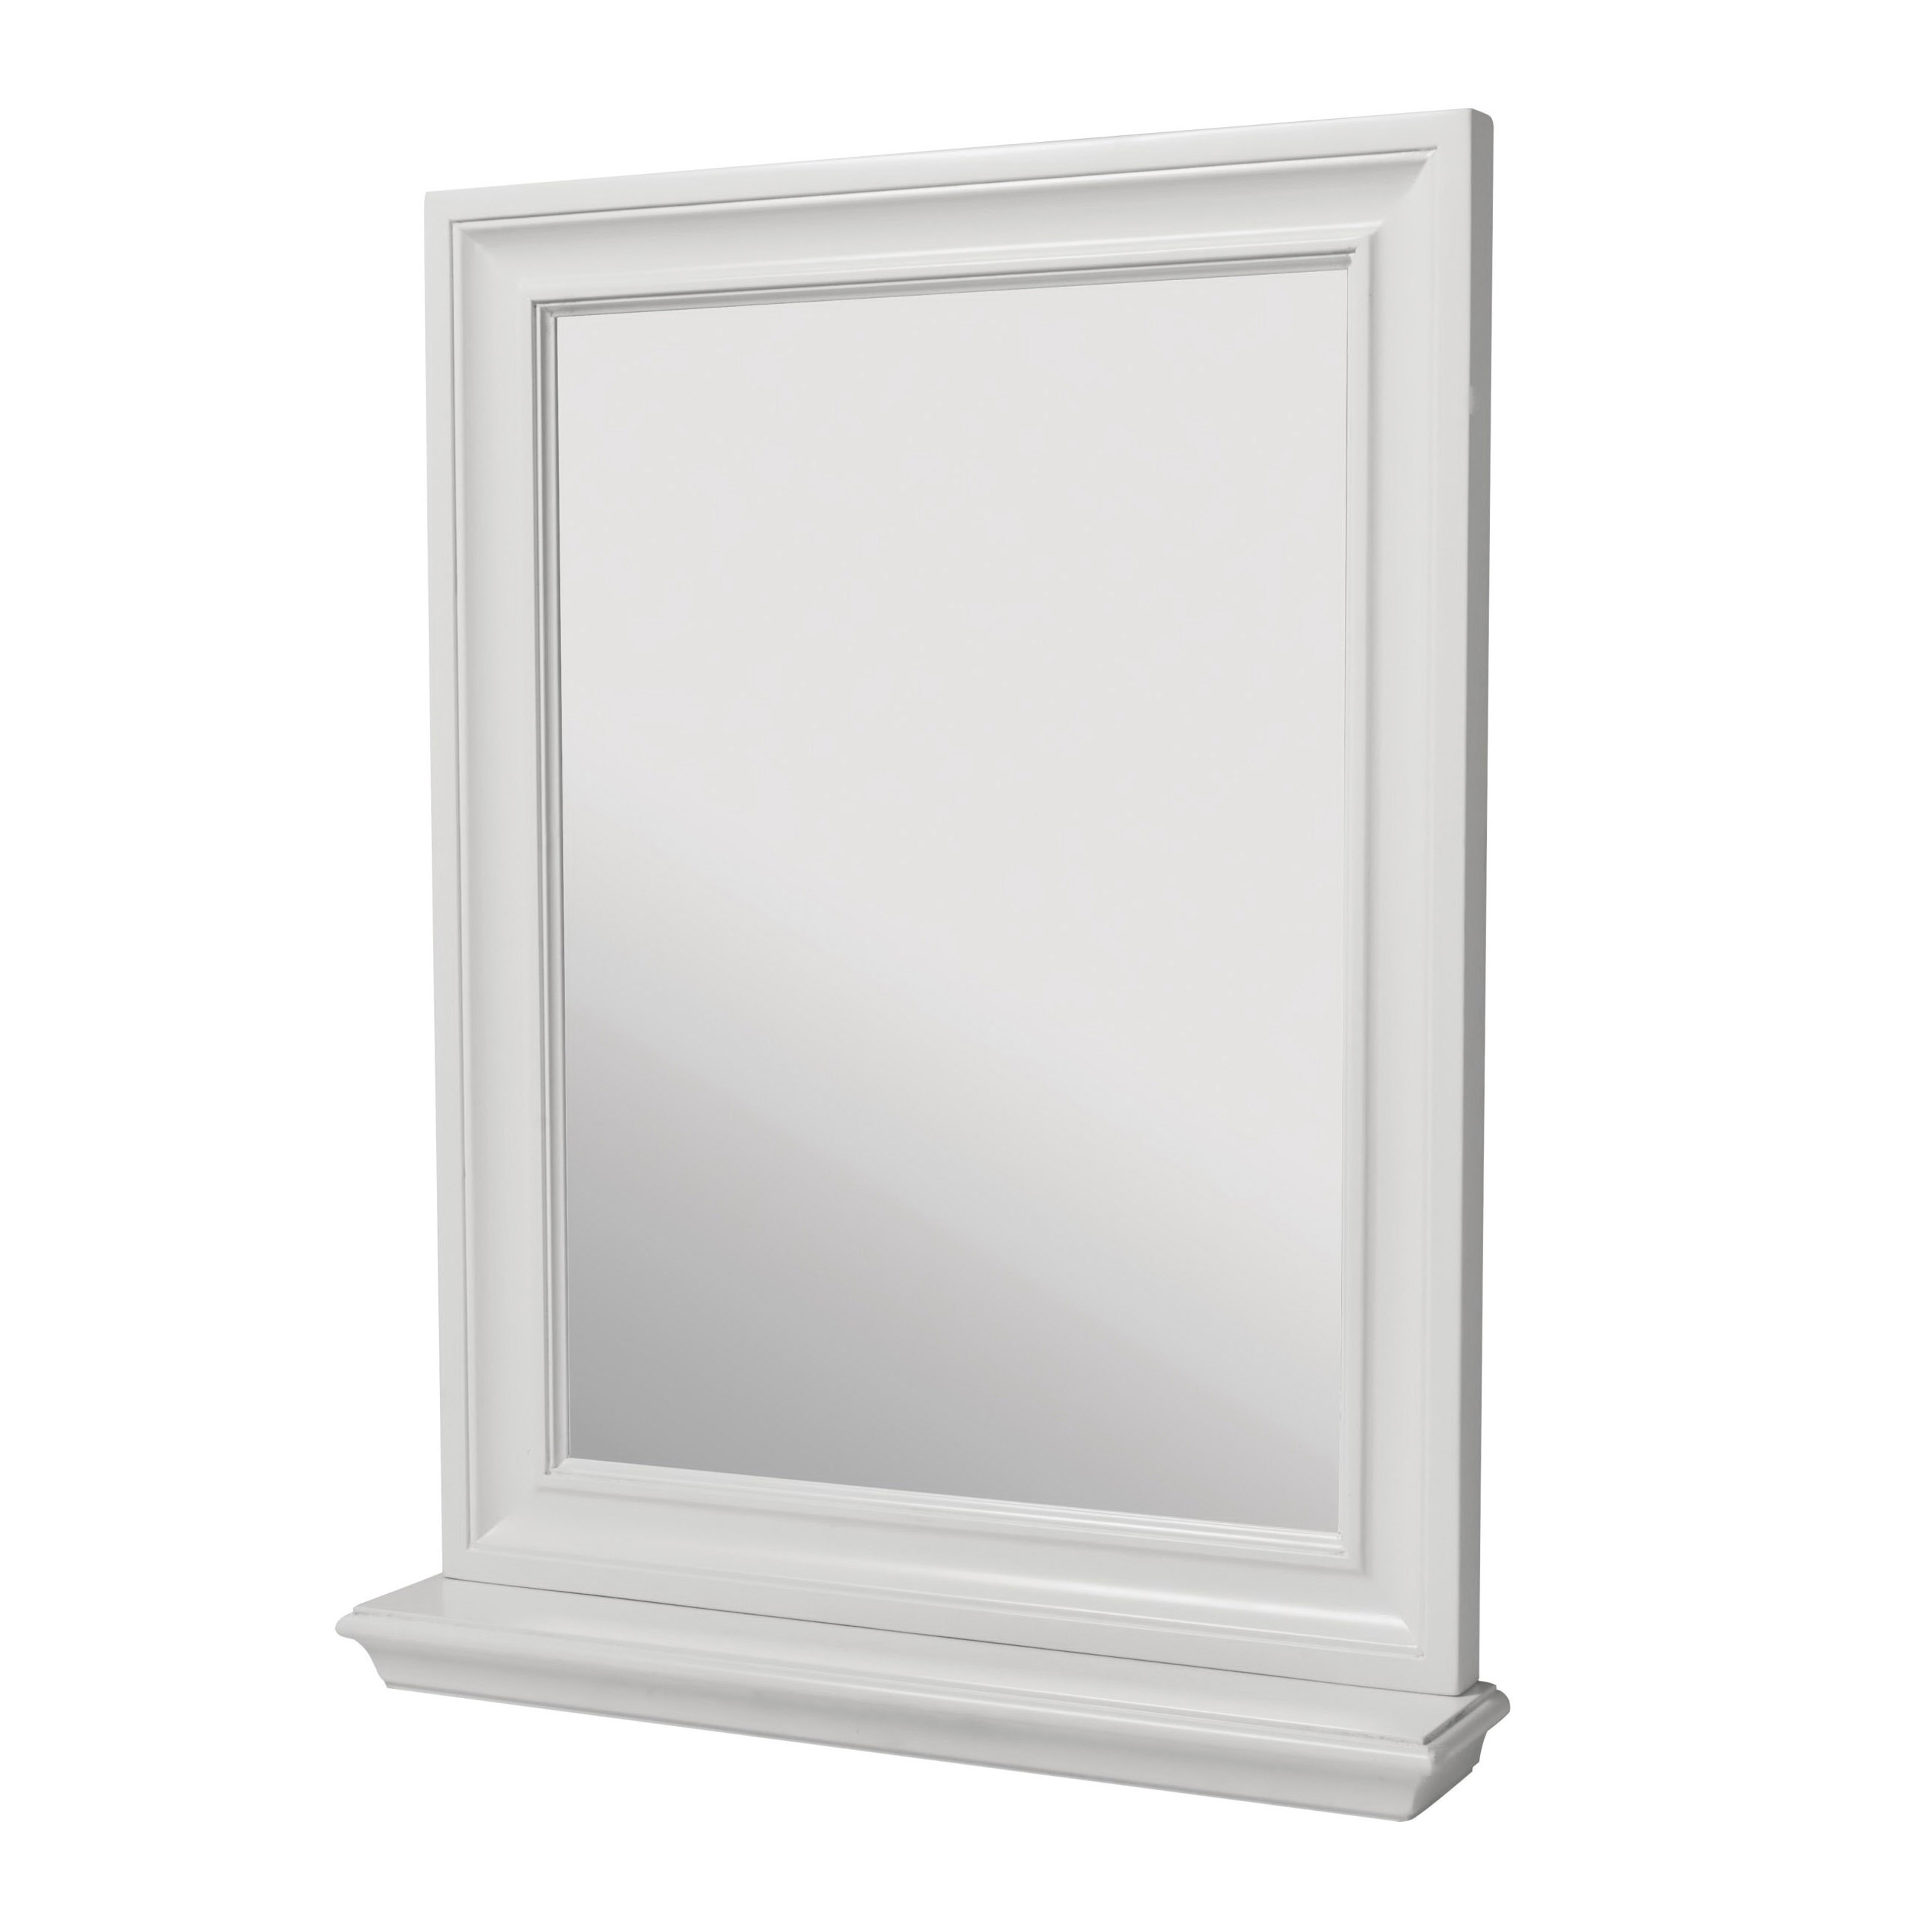 Cherie Series CHWM2430 Framed Mirror, Rectangular, 24 in W, 30 in H, Wood Frame, White Frame, Wall